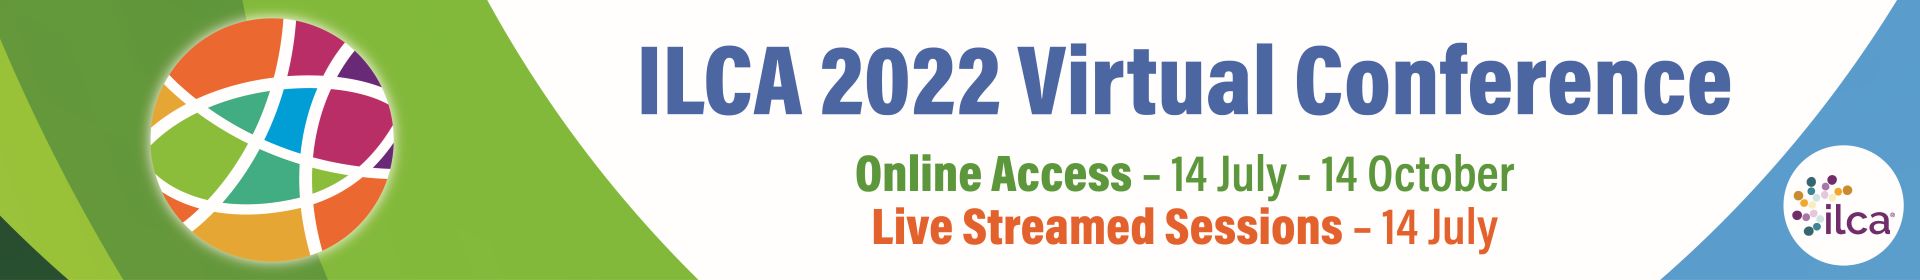 ILCA 2022 Virtual Conference Event Banner